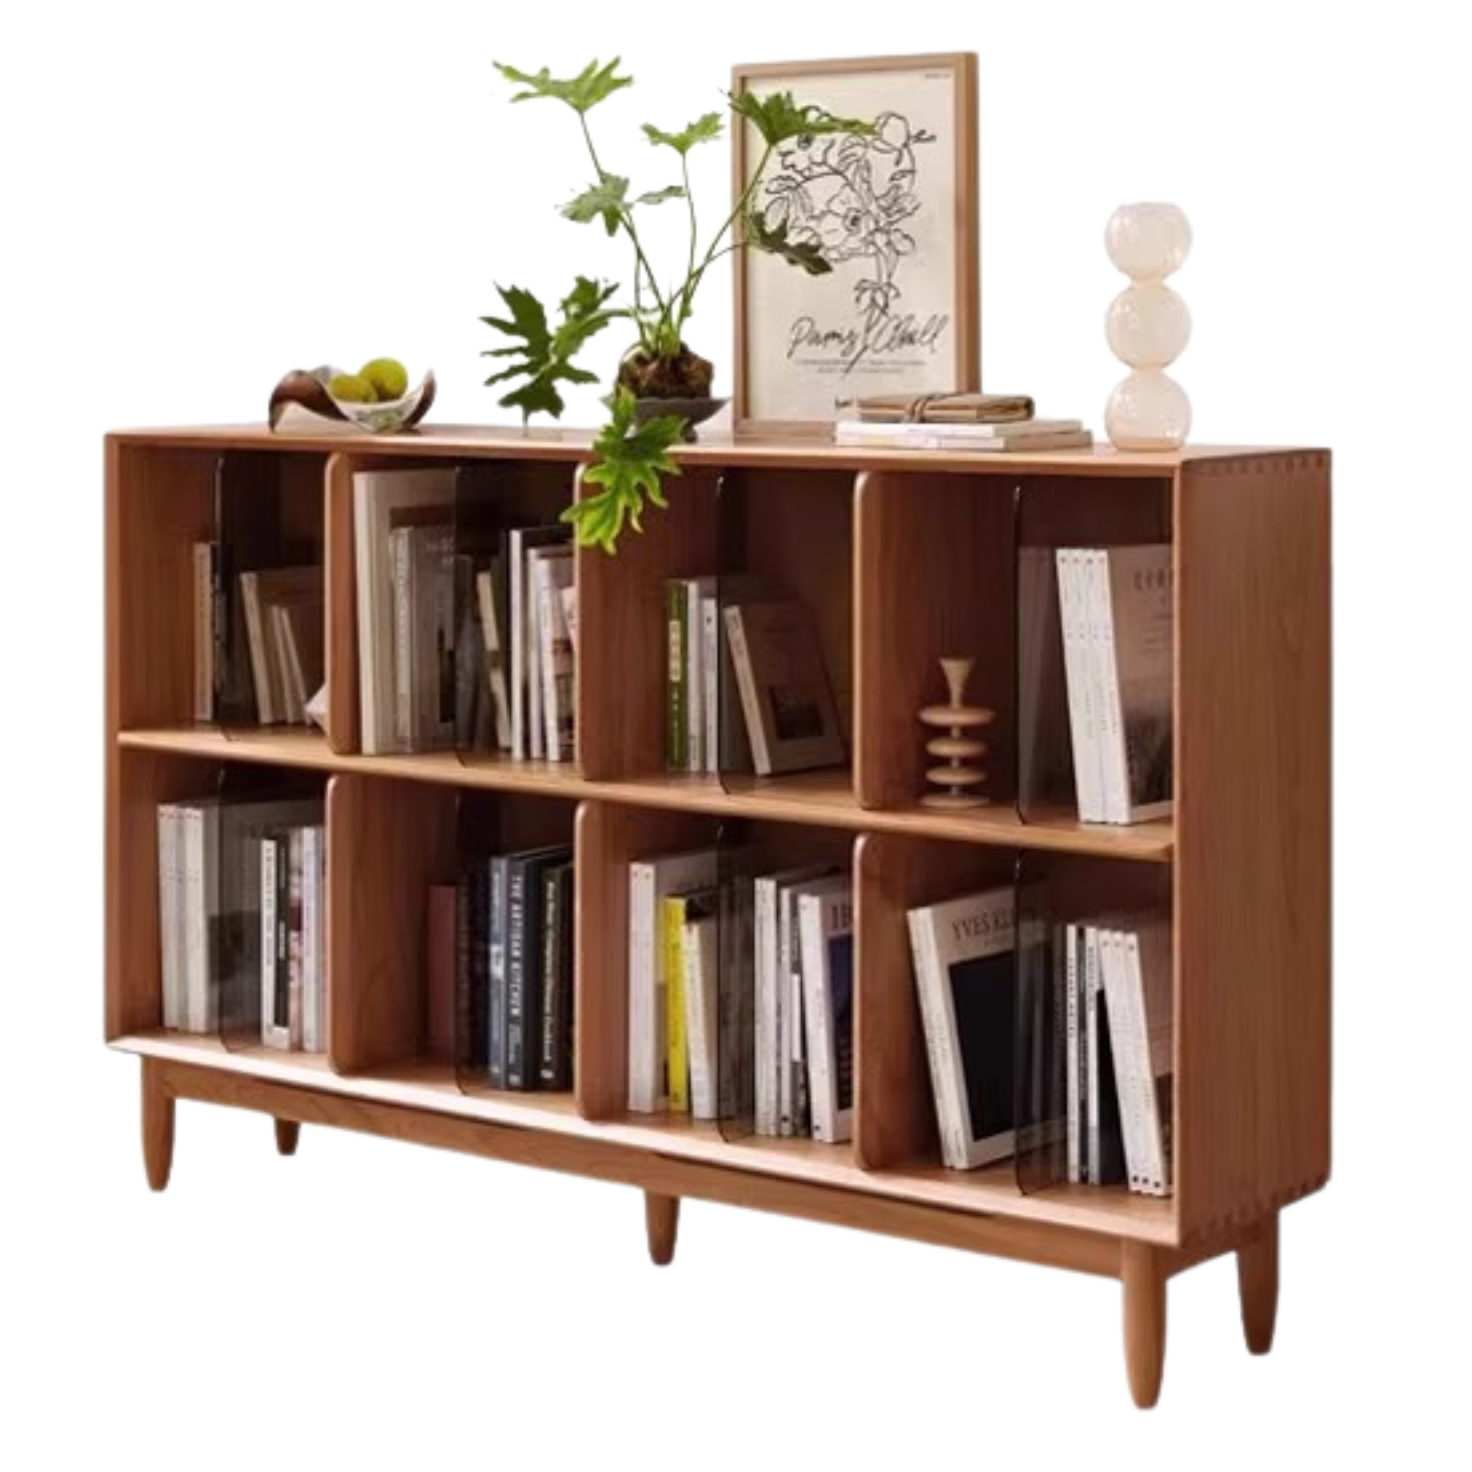 Cherry solid wood Bookshelf lattice cabinet -